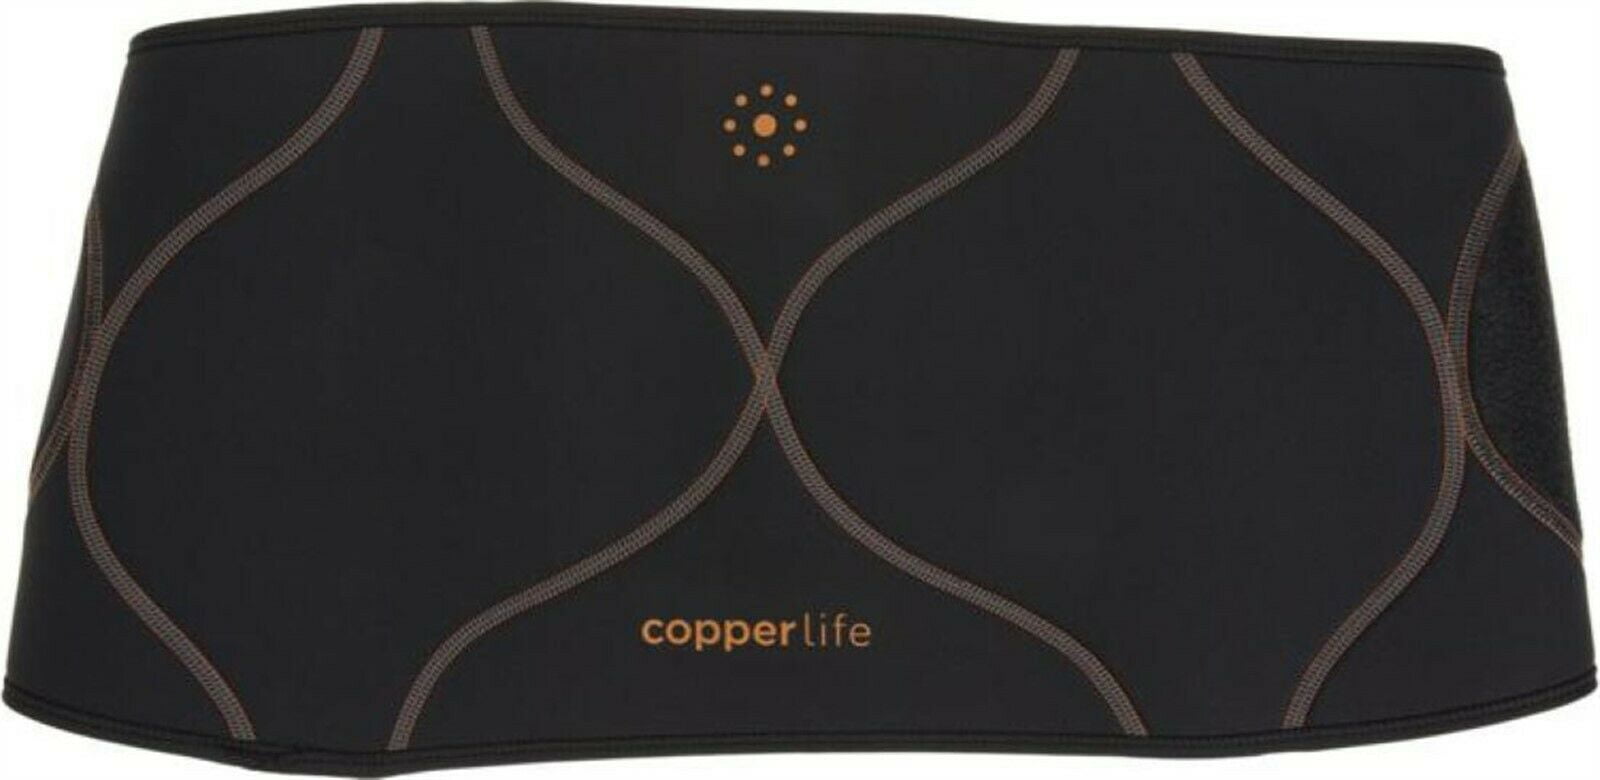 Tagulla Life Tommie Copper Copper Copper Copper Nigeria